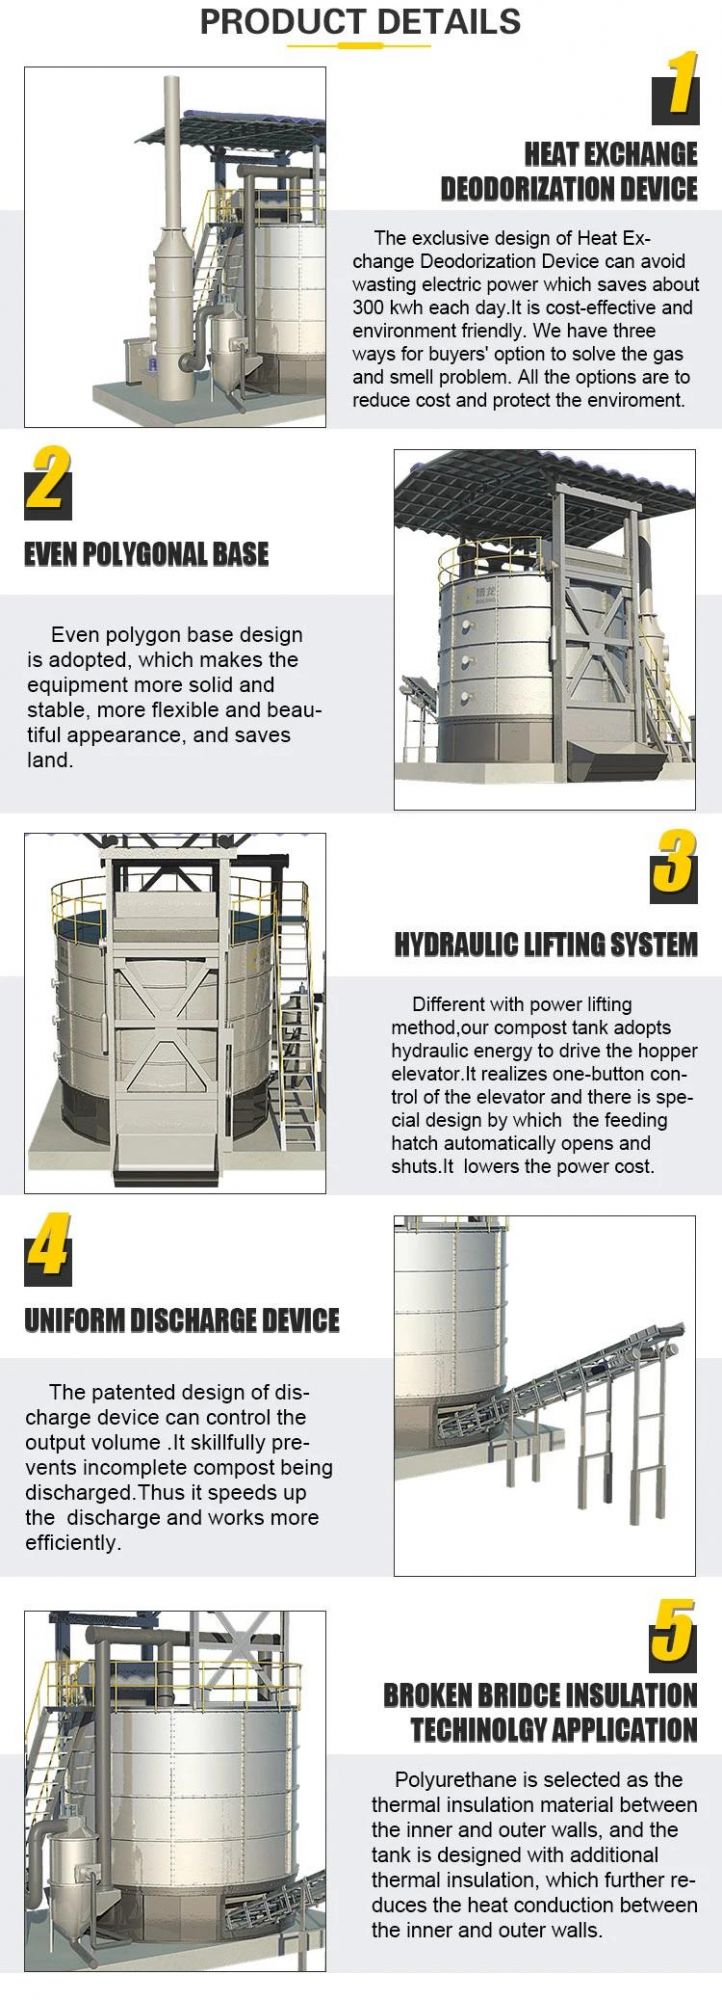 Large Aerobic Fermentation Tank